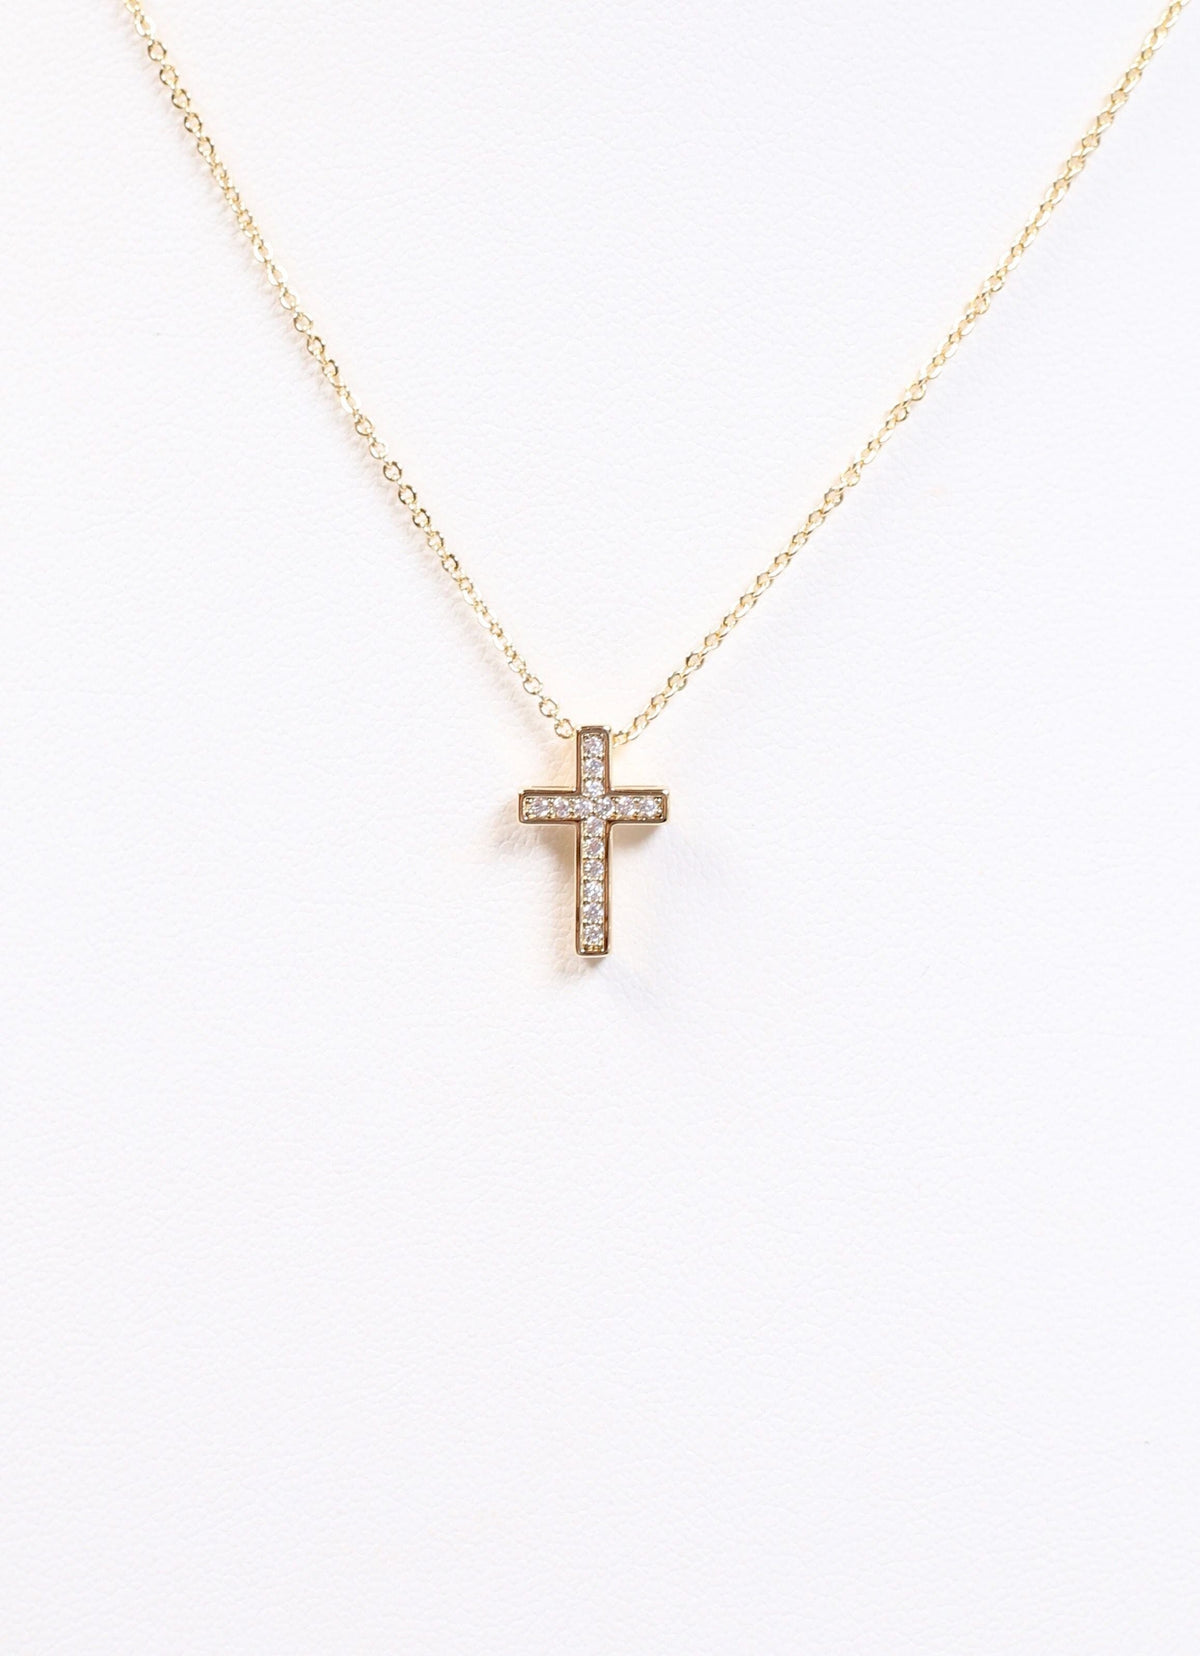 Saint CZ Cross Necklace GOLD - Caroline Hill